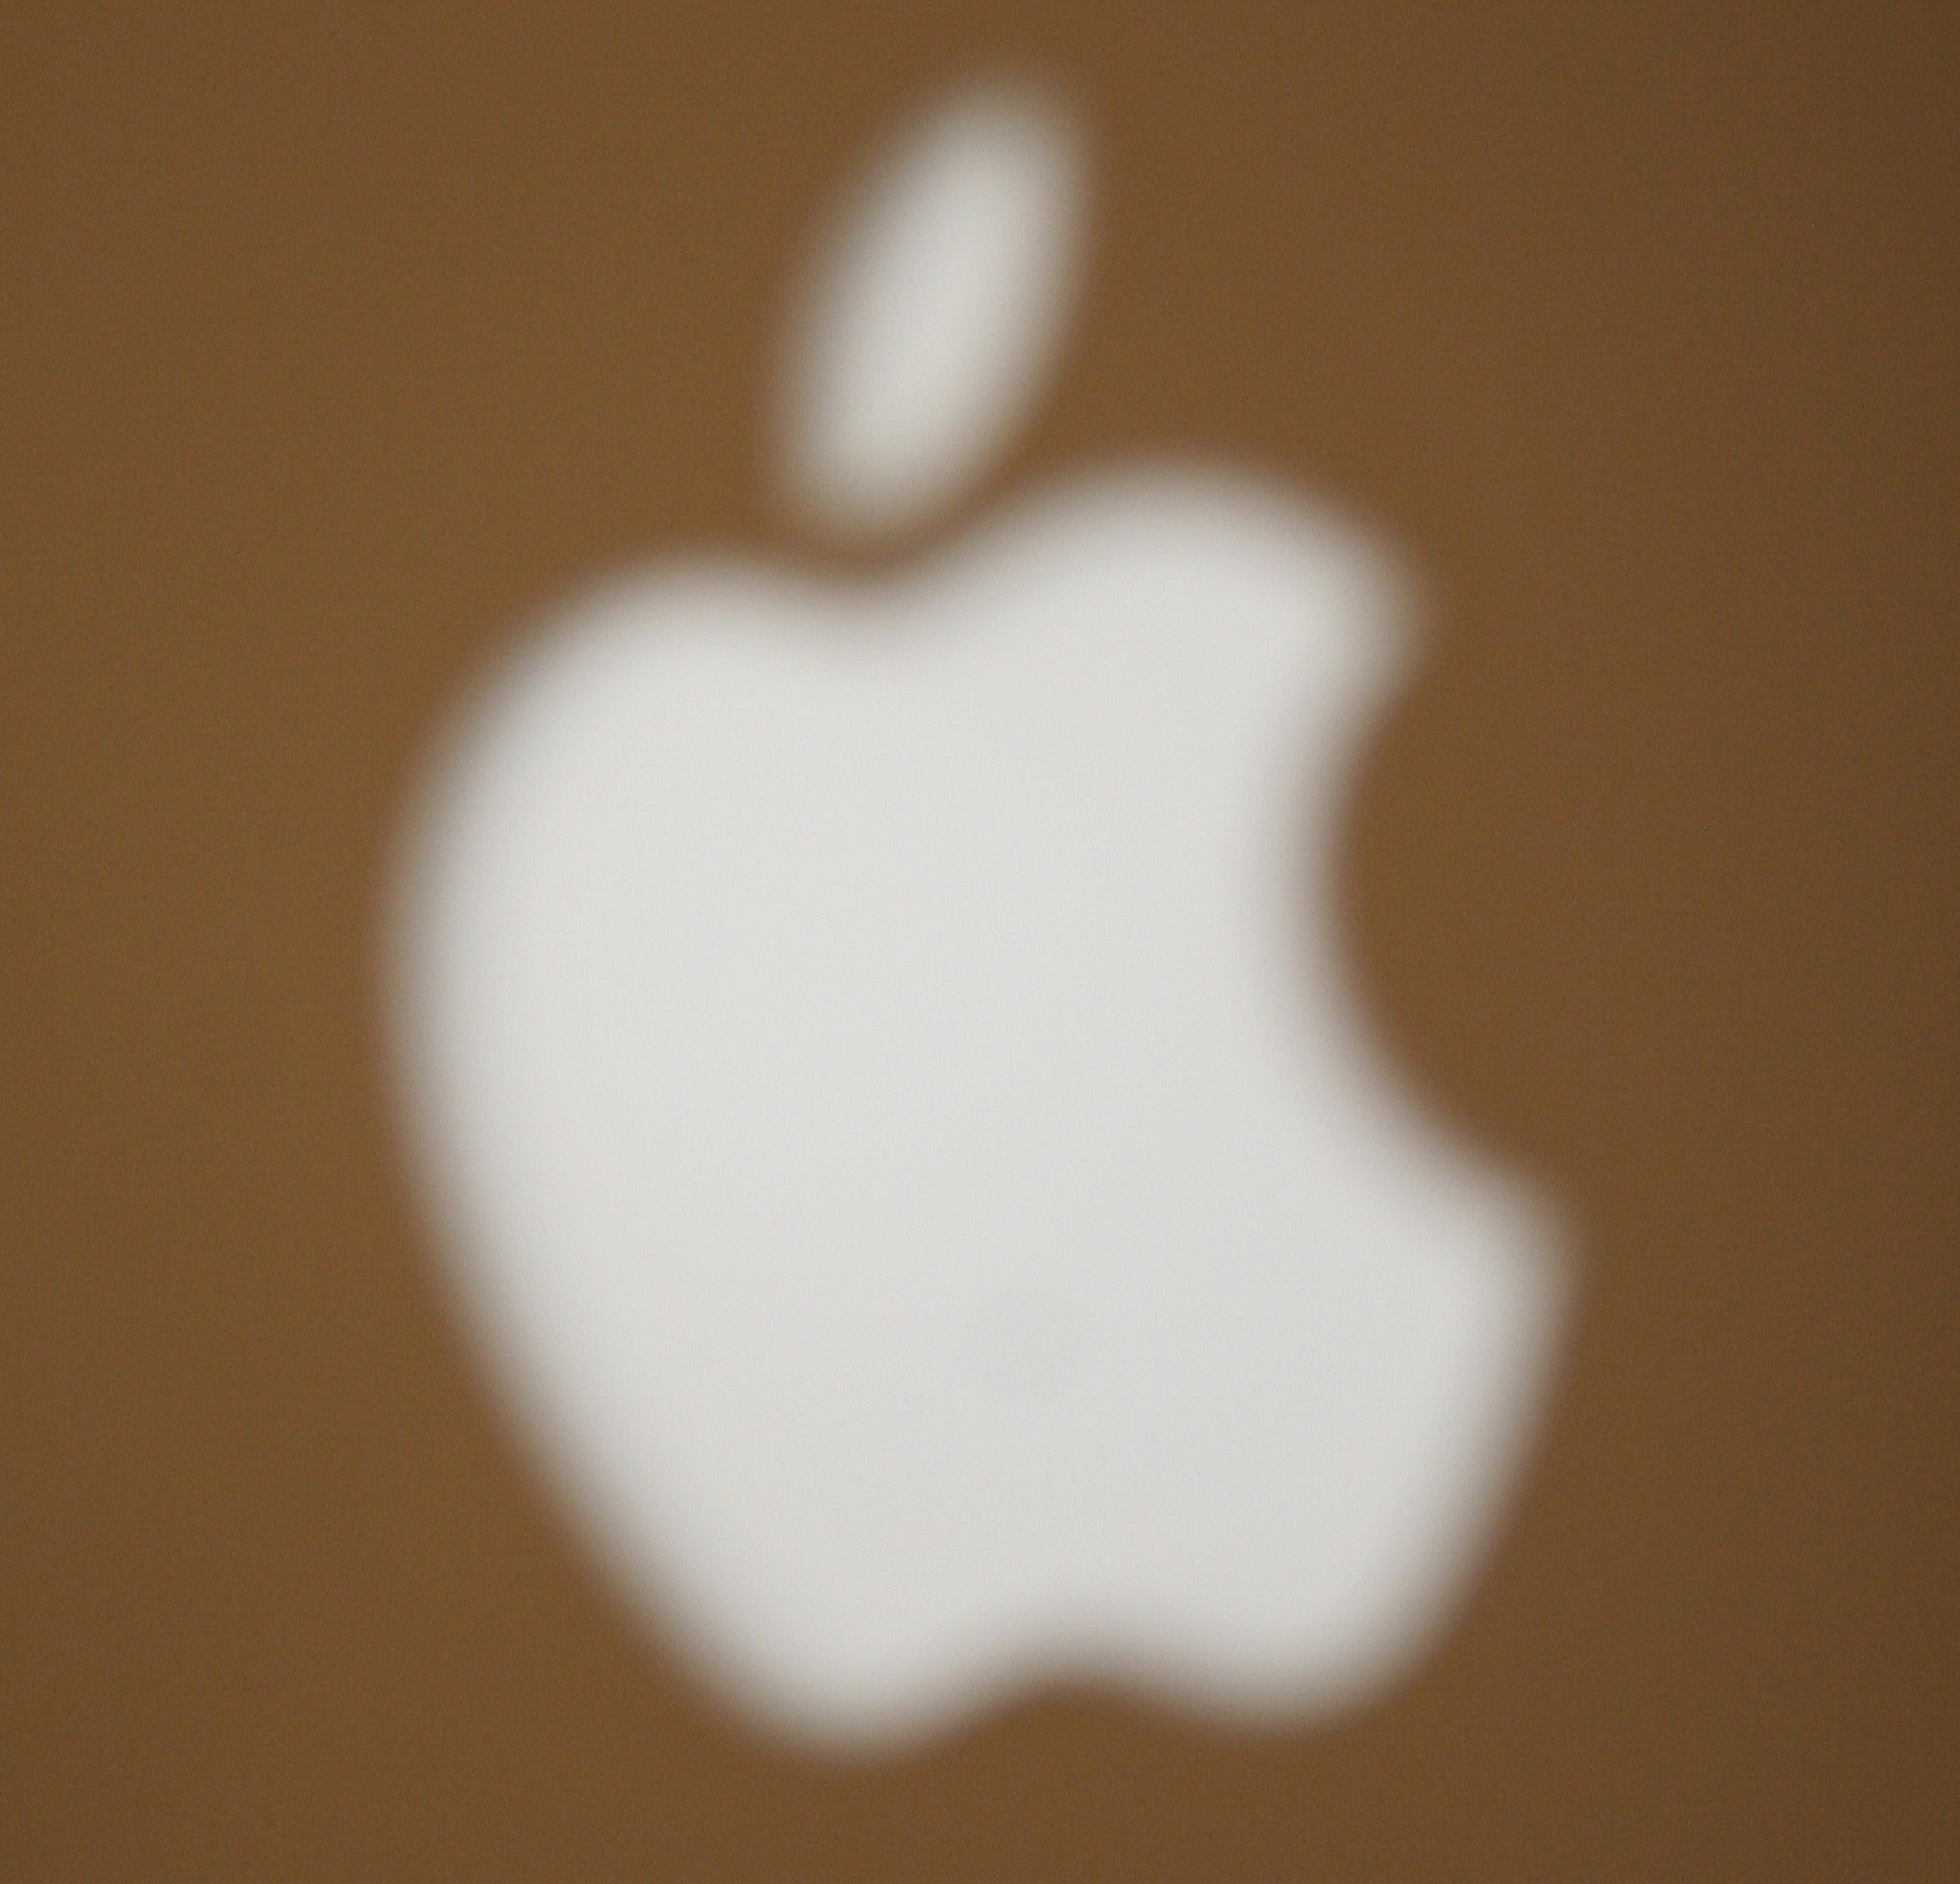 applewin blurry image